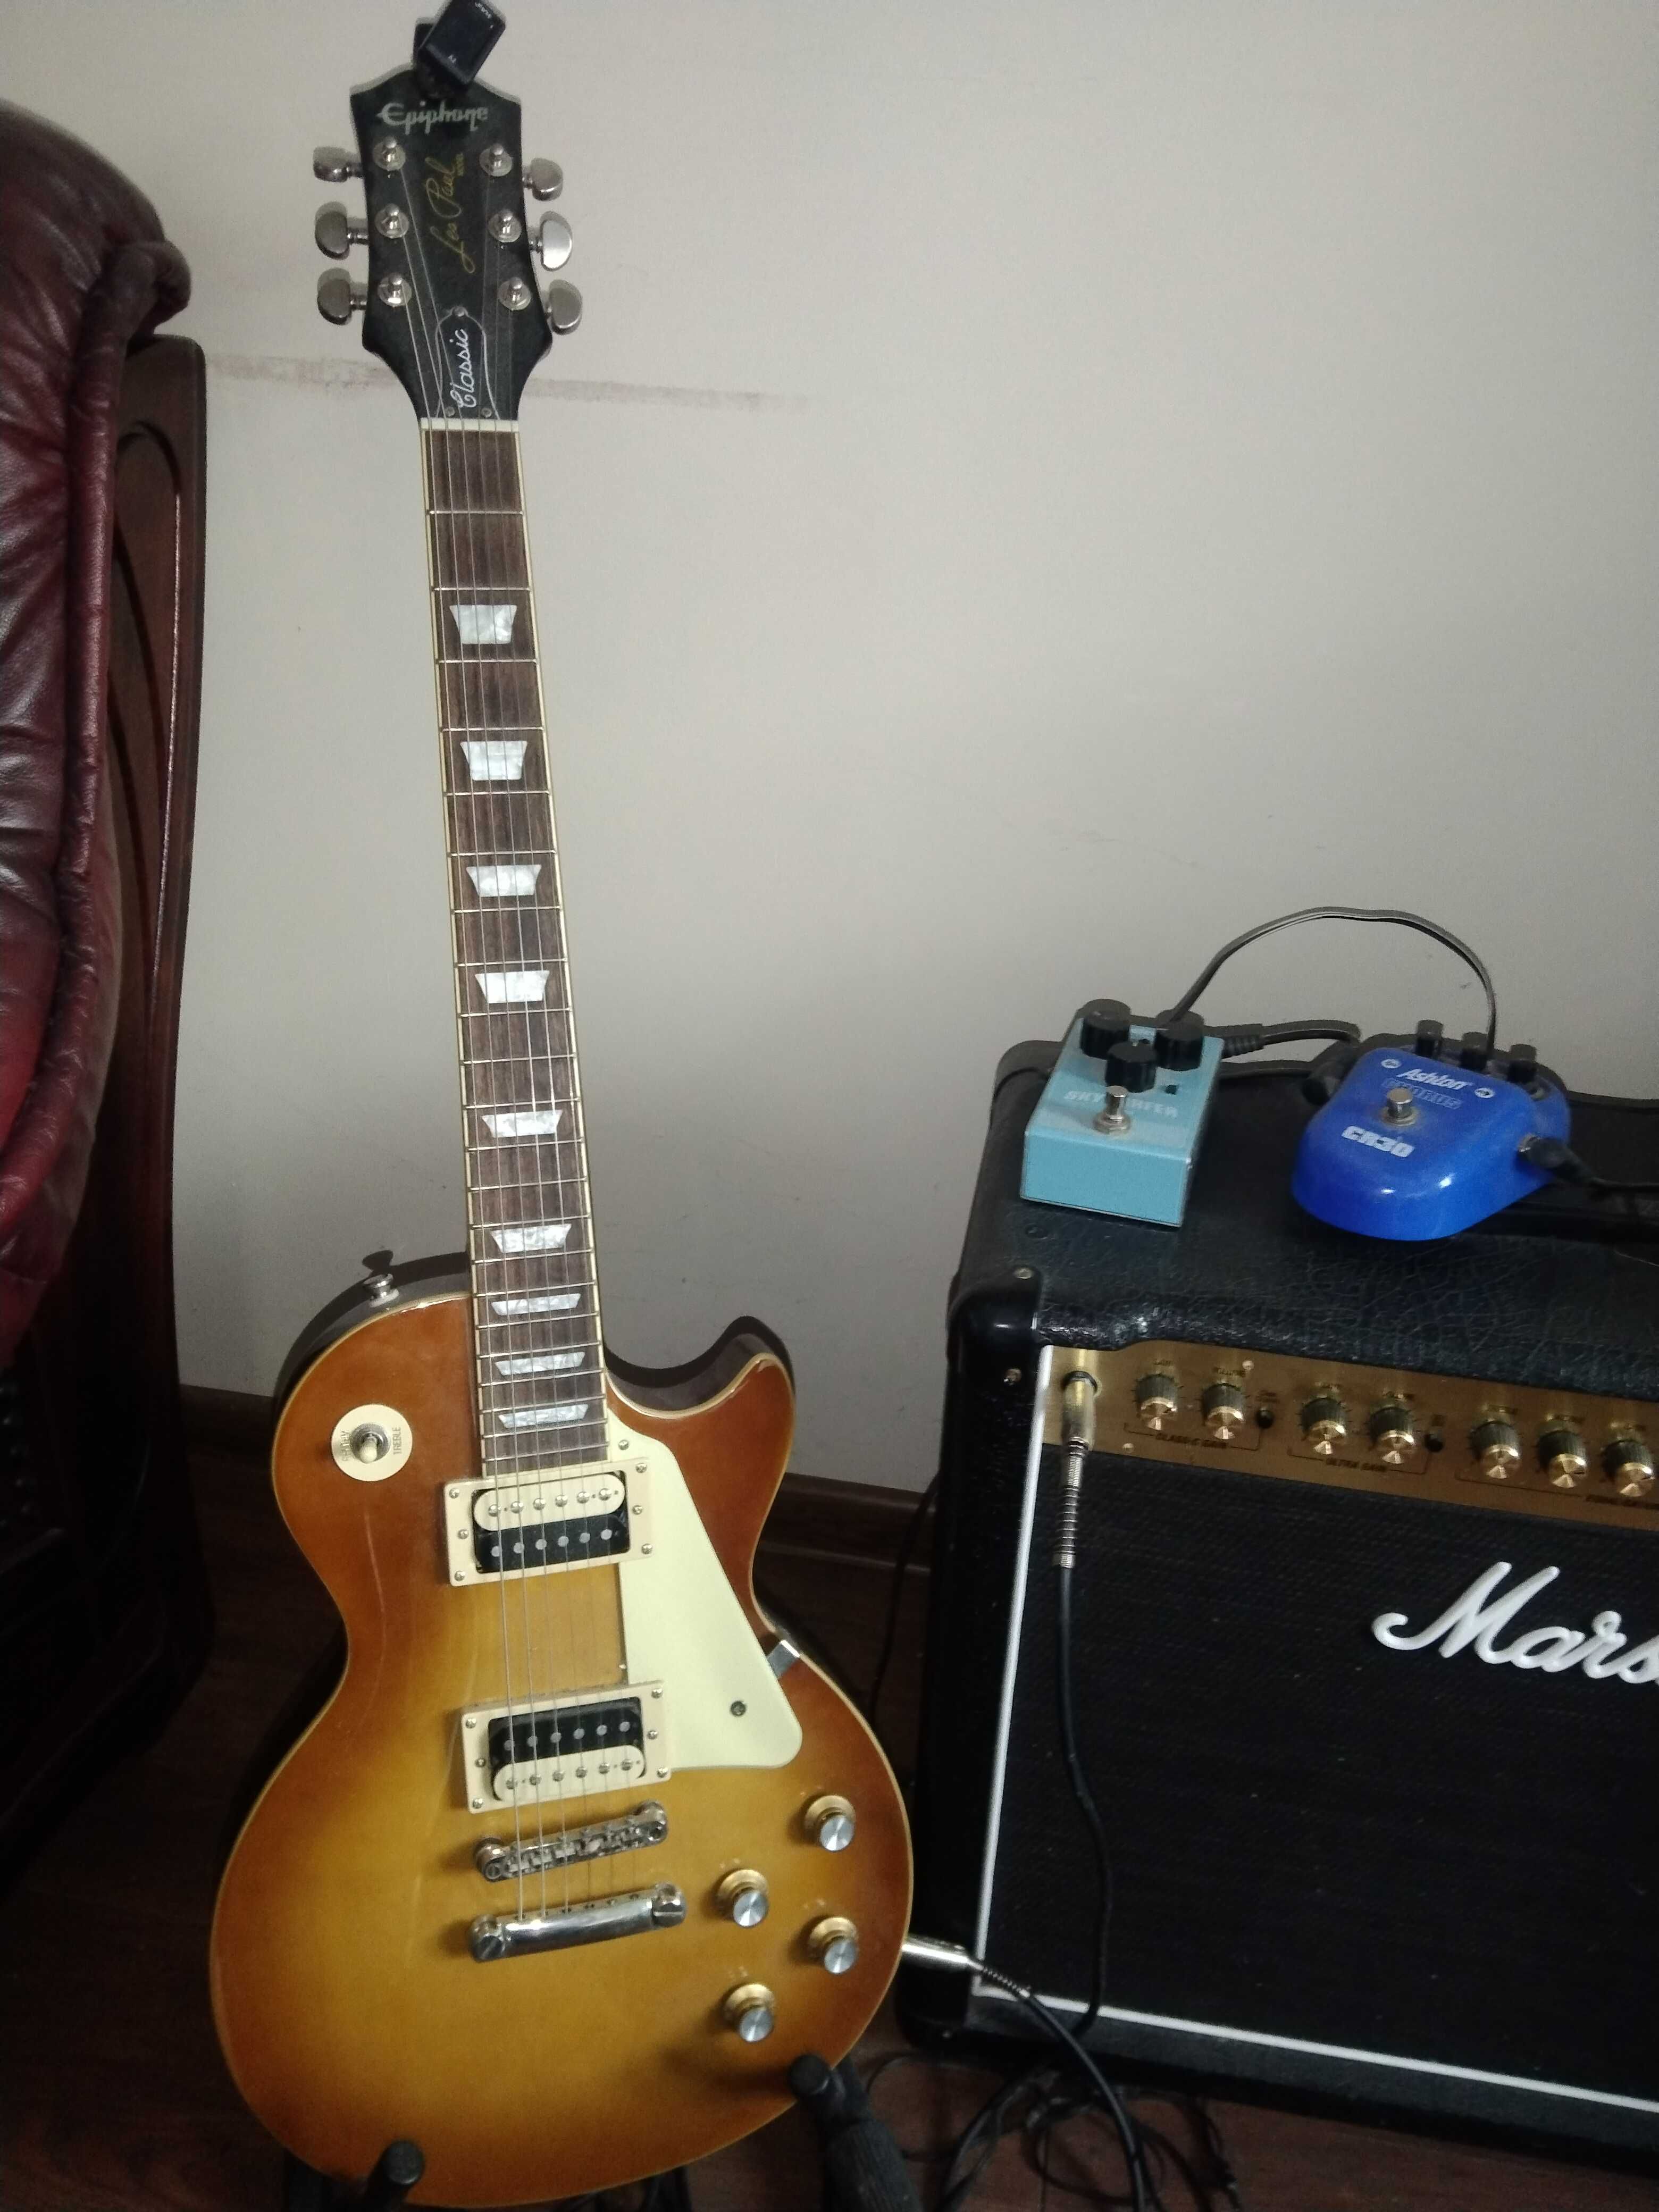 Gitara Epiphone classic Marshall DSL 40 CR zestaw